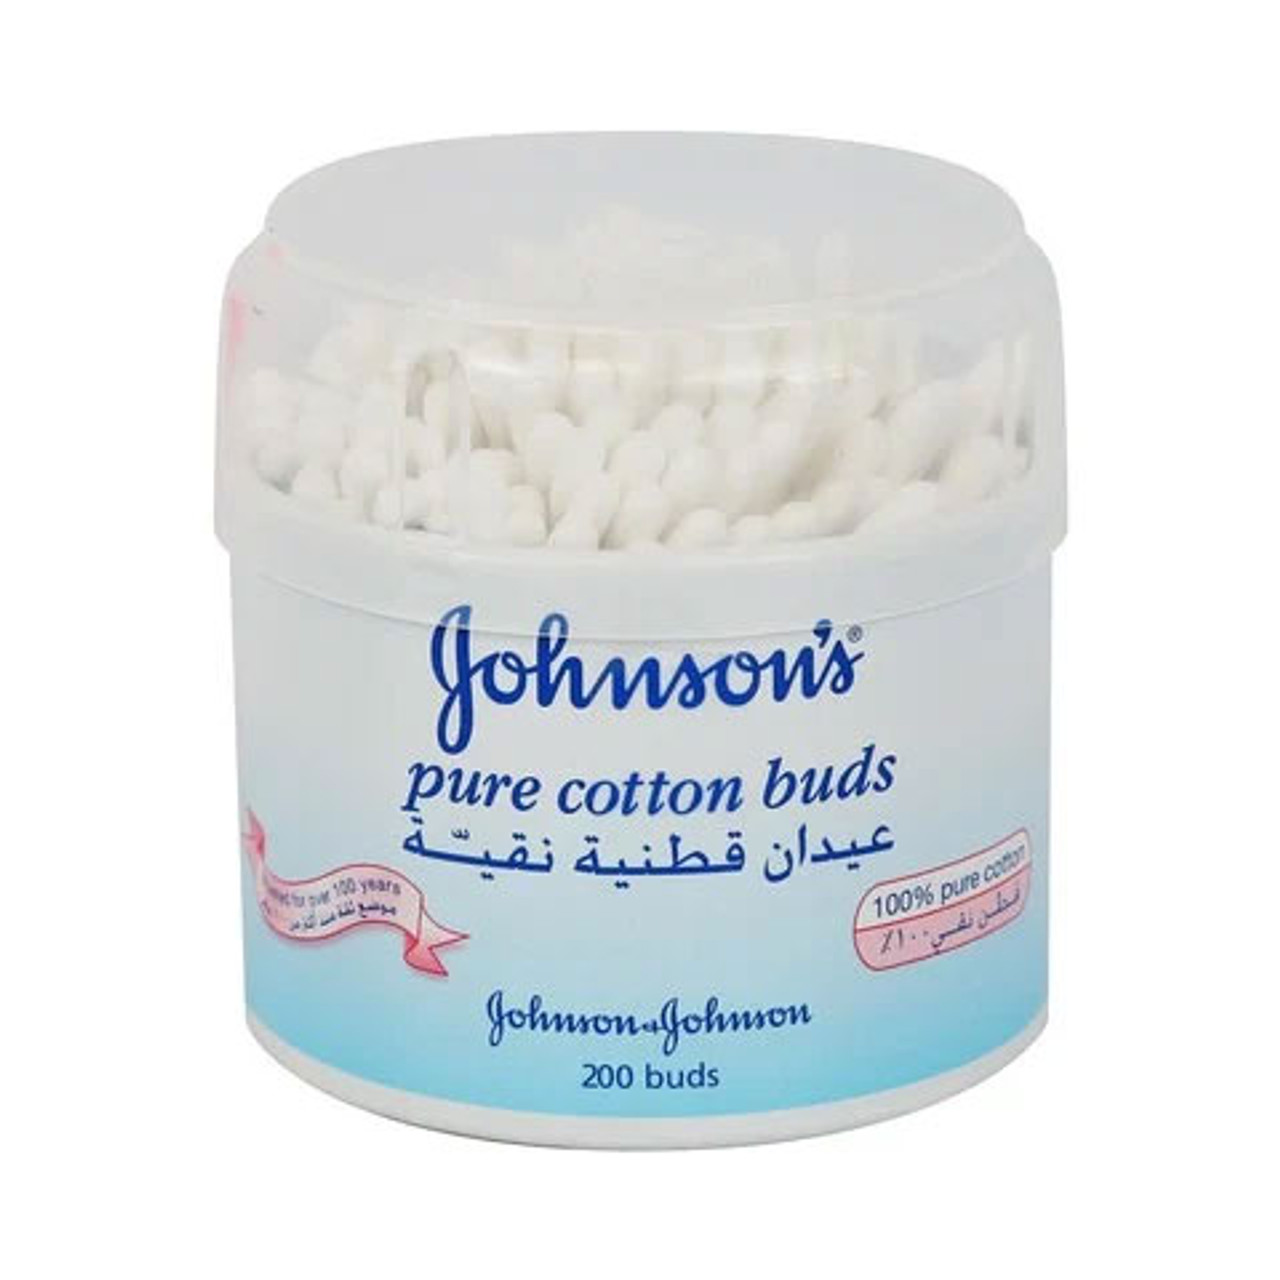 Johnson's Pure Cotton Buds 200 Buds - Panda.qa